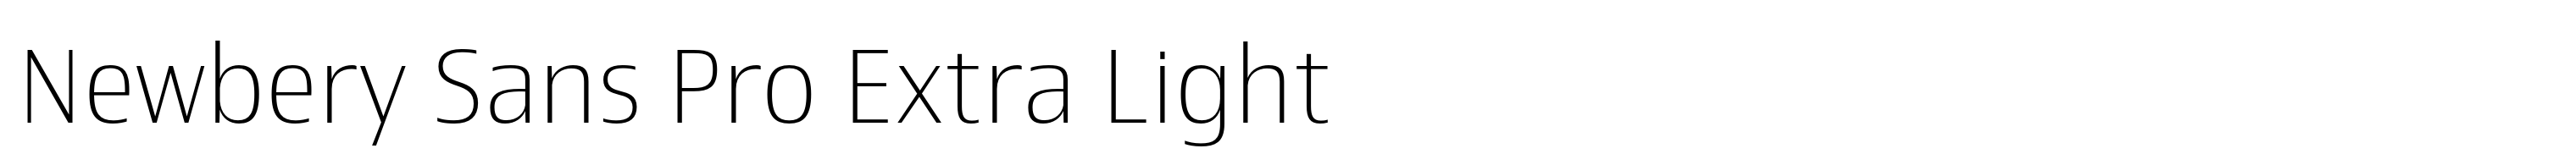 Newbery Sans Pro Extra Light